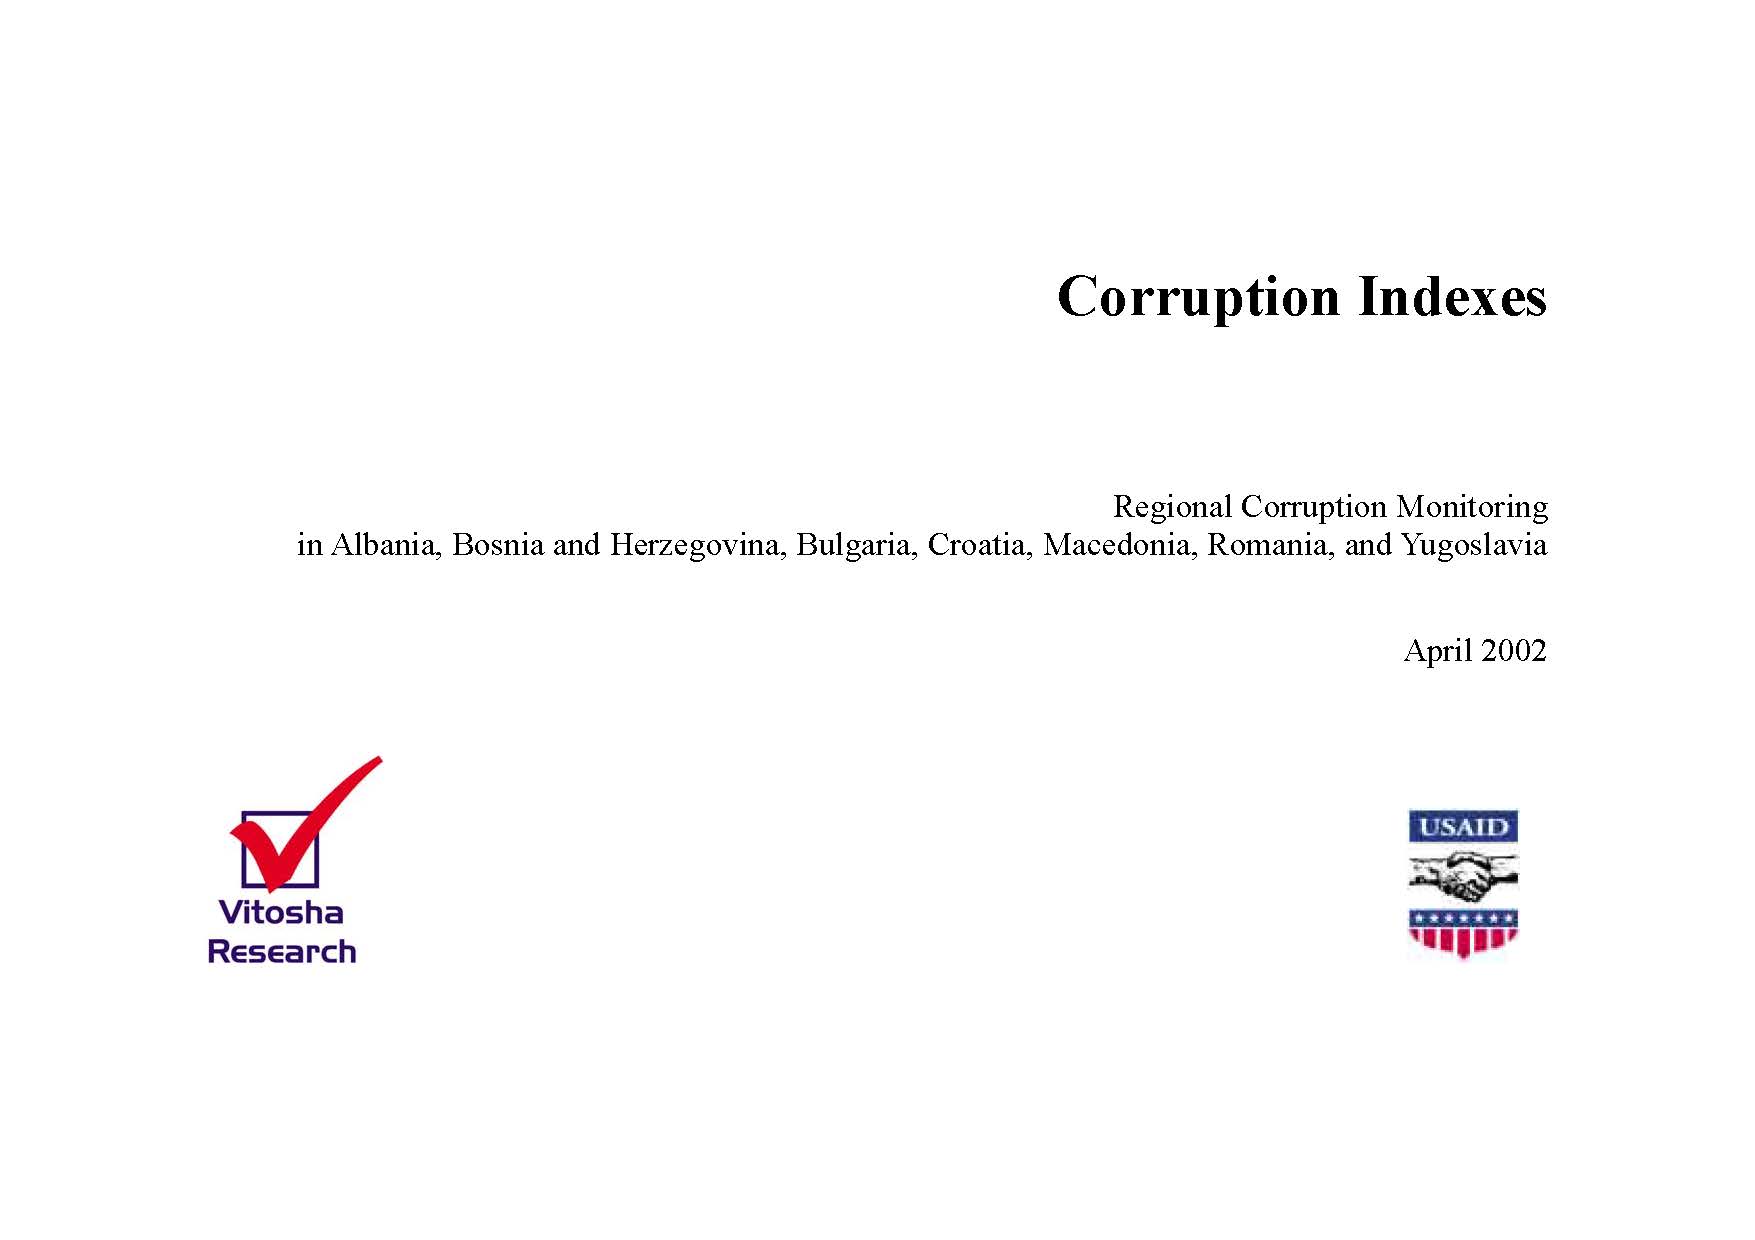 Corruption Indexes, Regional Corruption Monitoring in Albania, Bosnia and Herzegovina, Bulgaria, Croatia, Macedonia, Romania, and Yugoslavia, April 2002